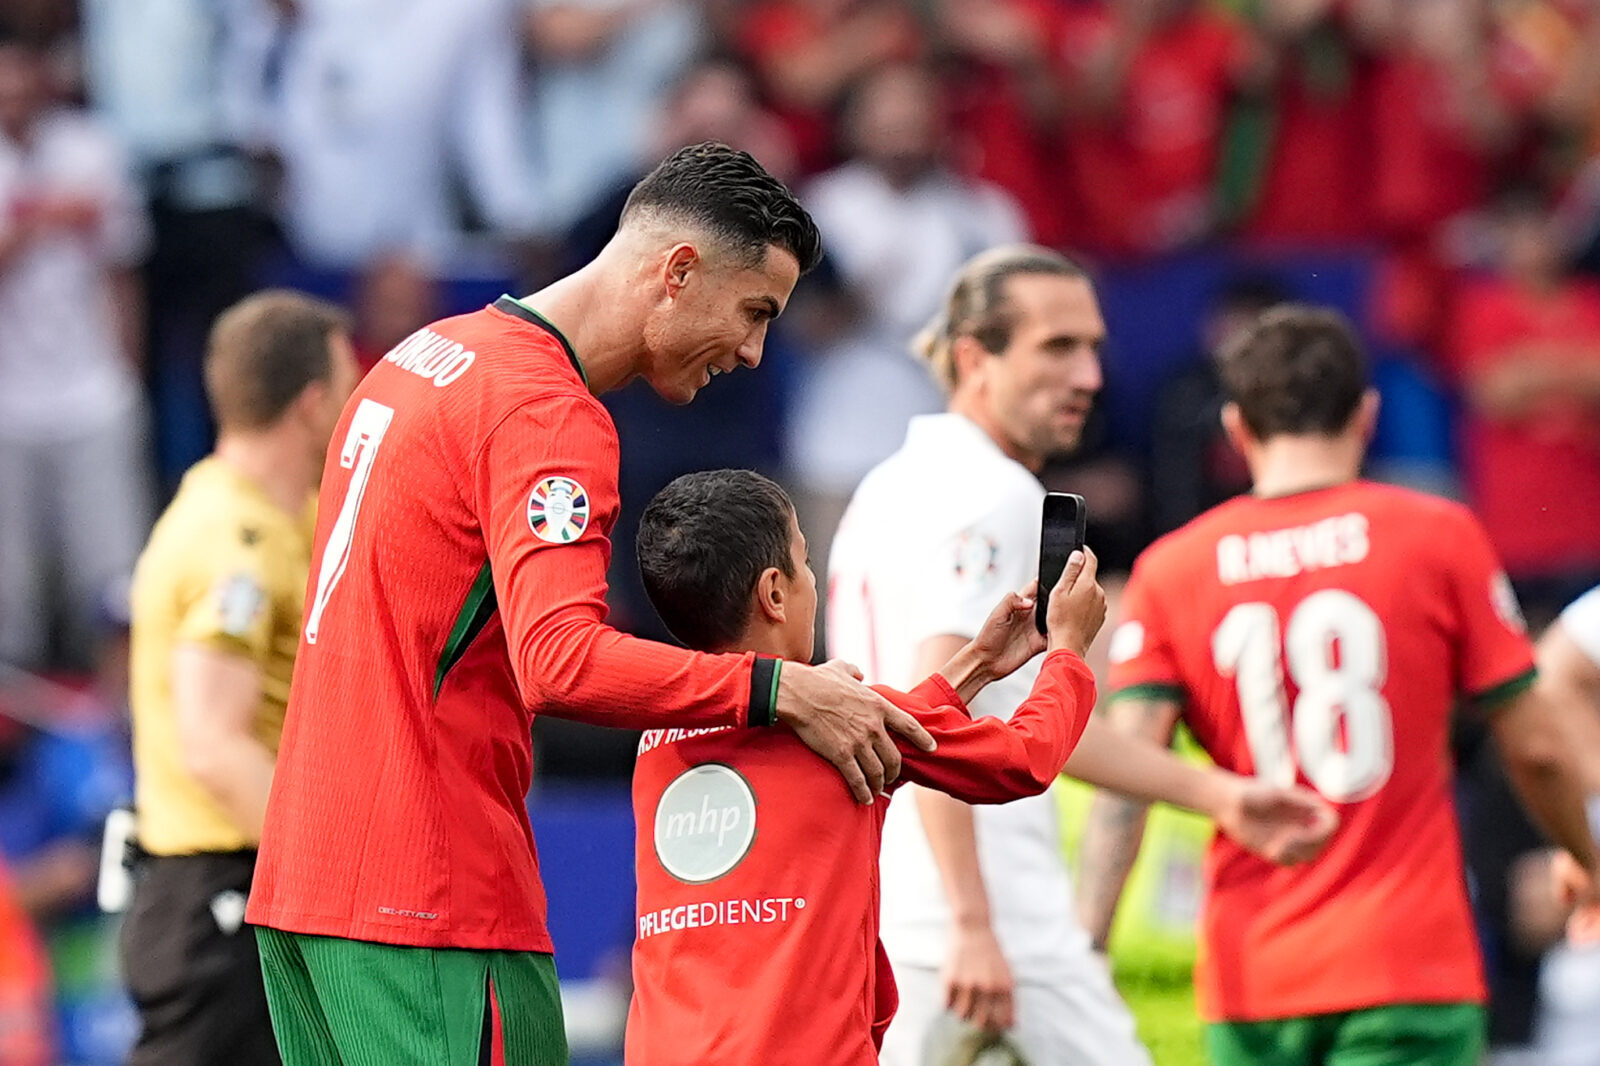 Türkiye national football team loses 3-0 to Portugal